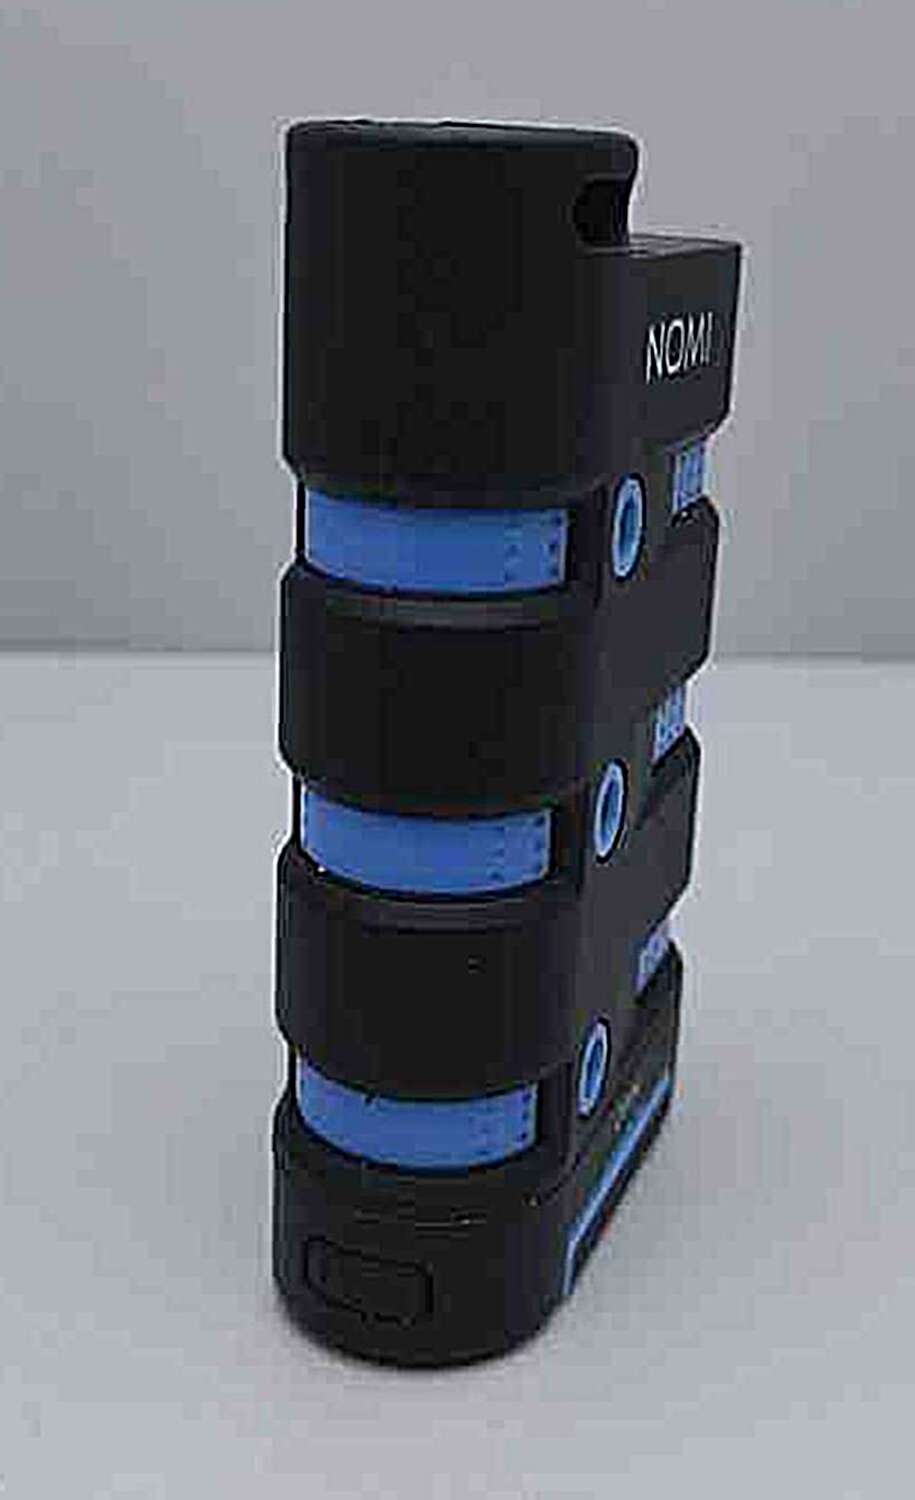 Powerbank Nomi W100 10050 mAh Black-Blue 9